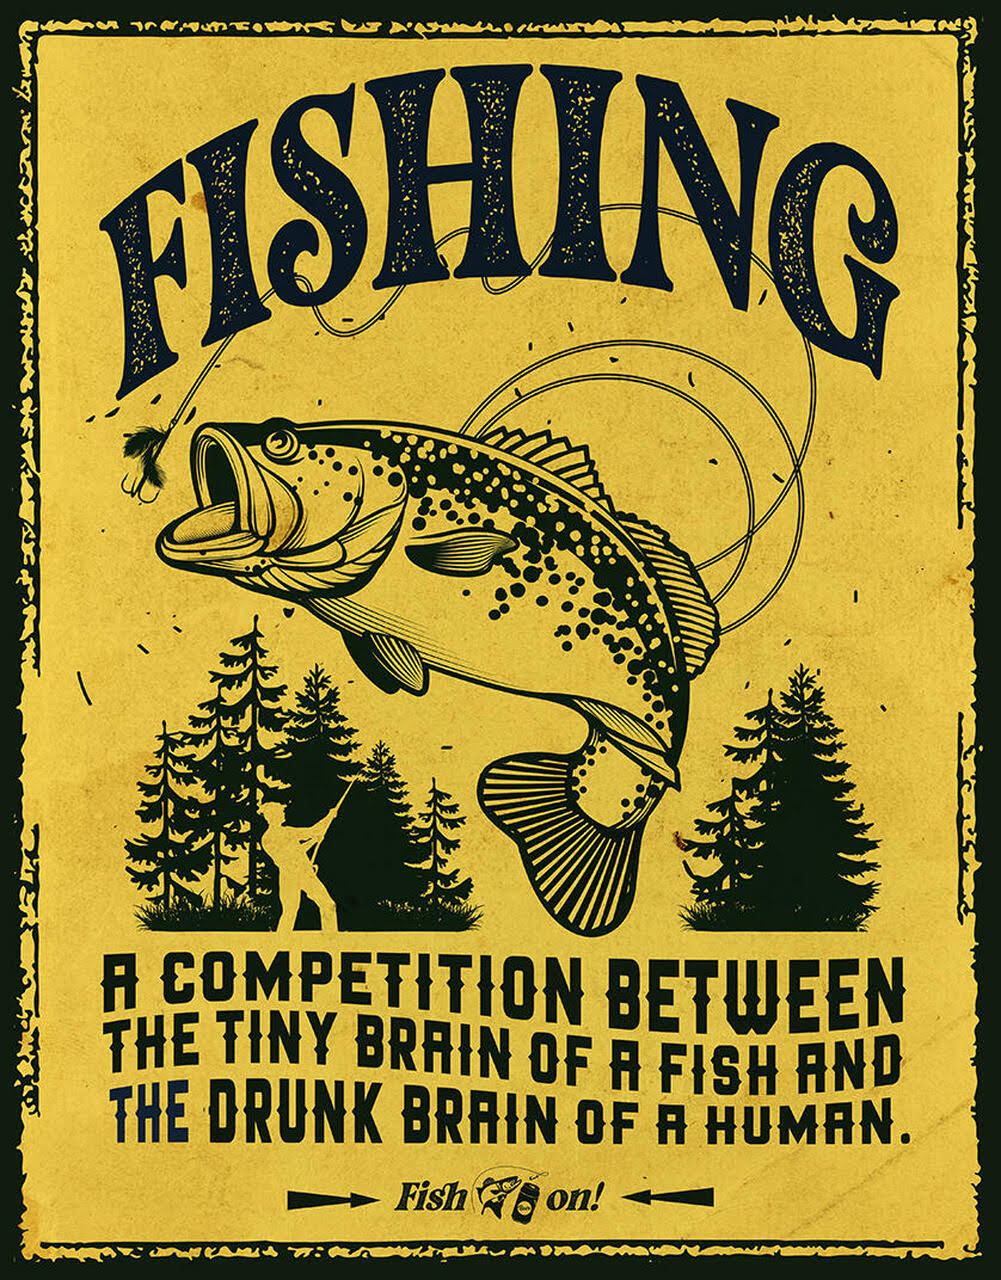 Fish on Fishing 12.5" x 16" Metal Tin Sign - 2656